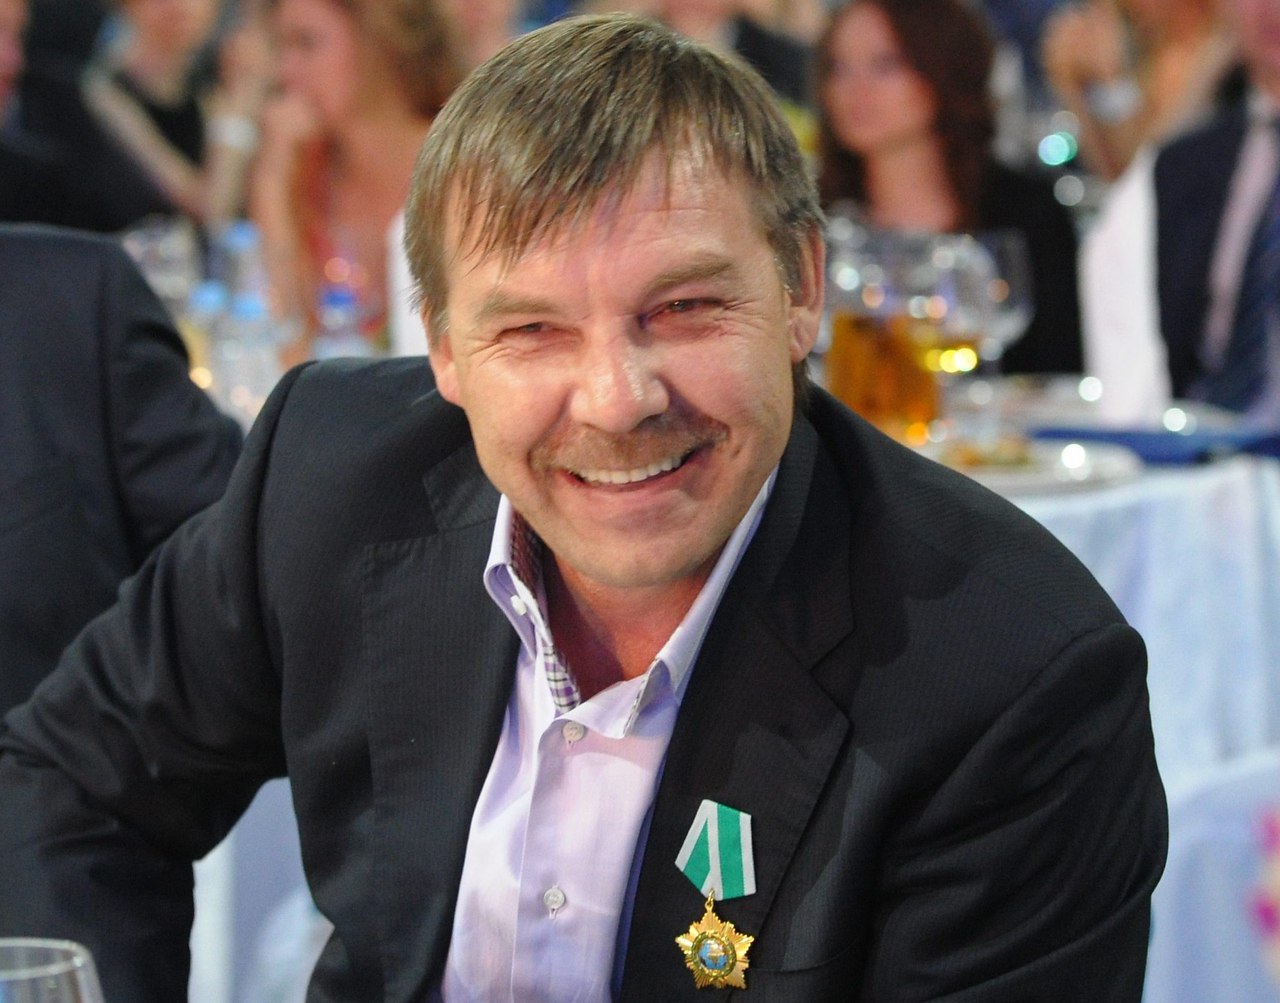 Олег Знарок